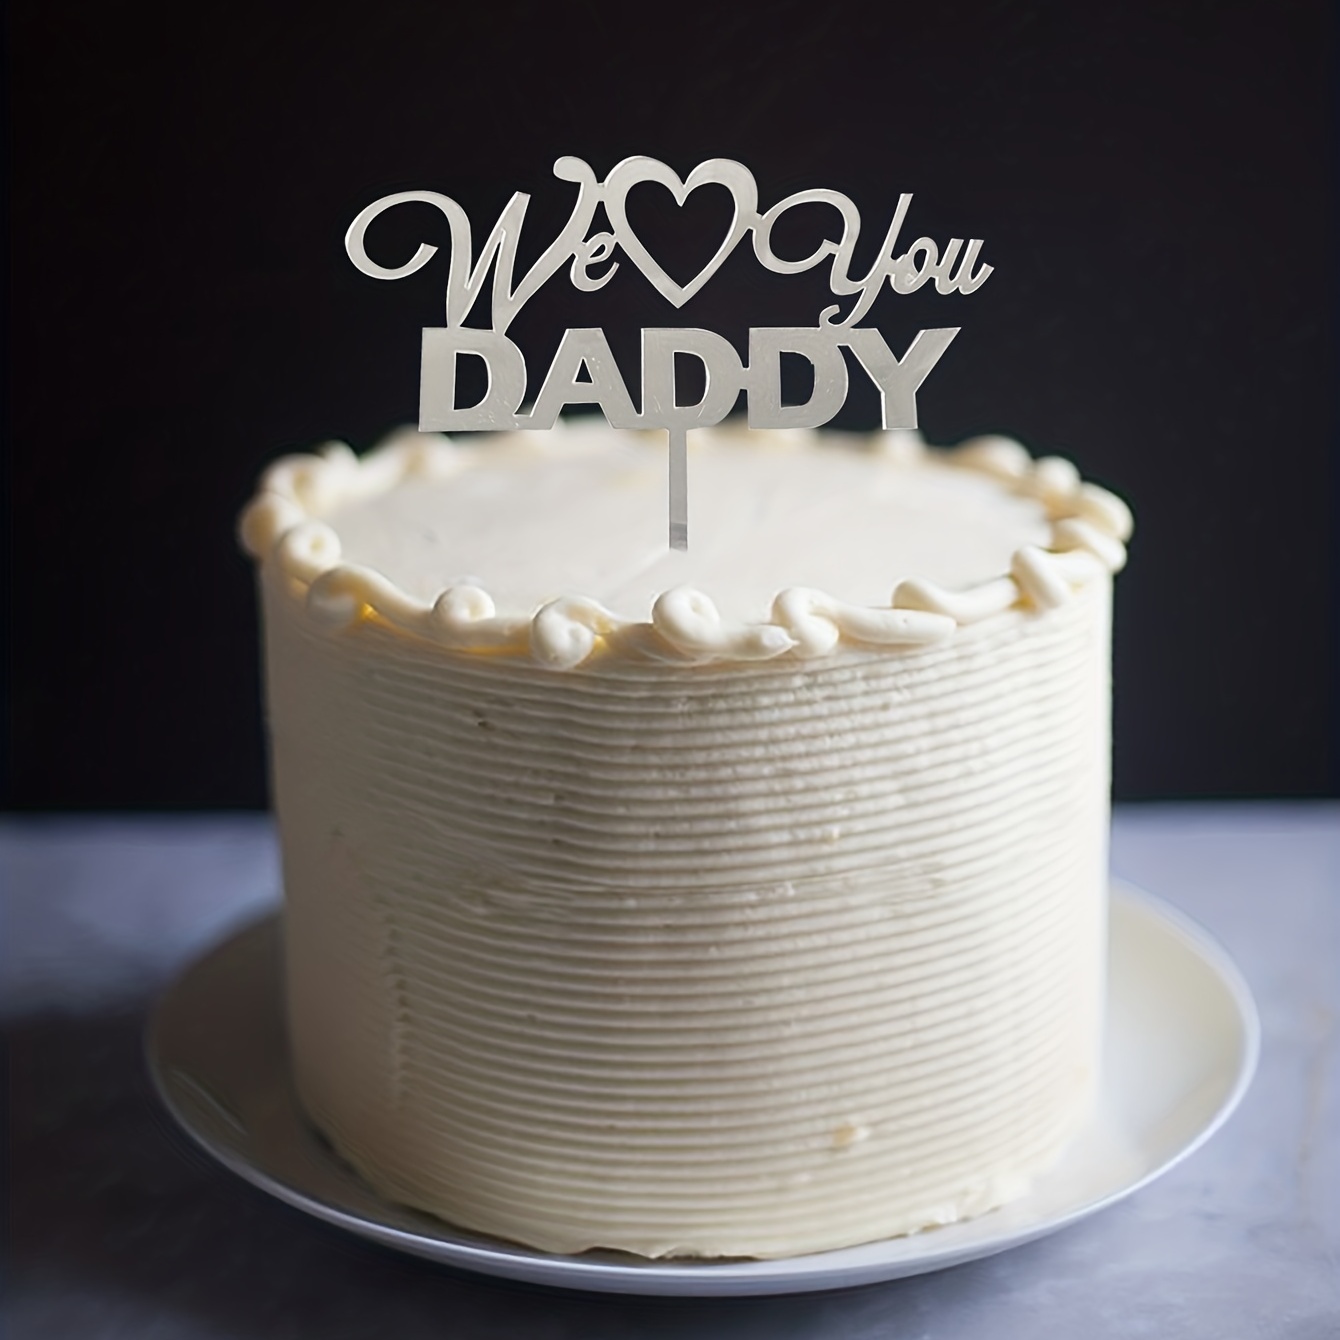 Best Papa Ever Cake